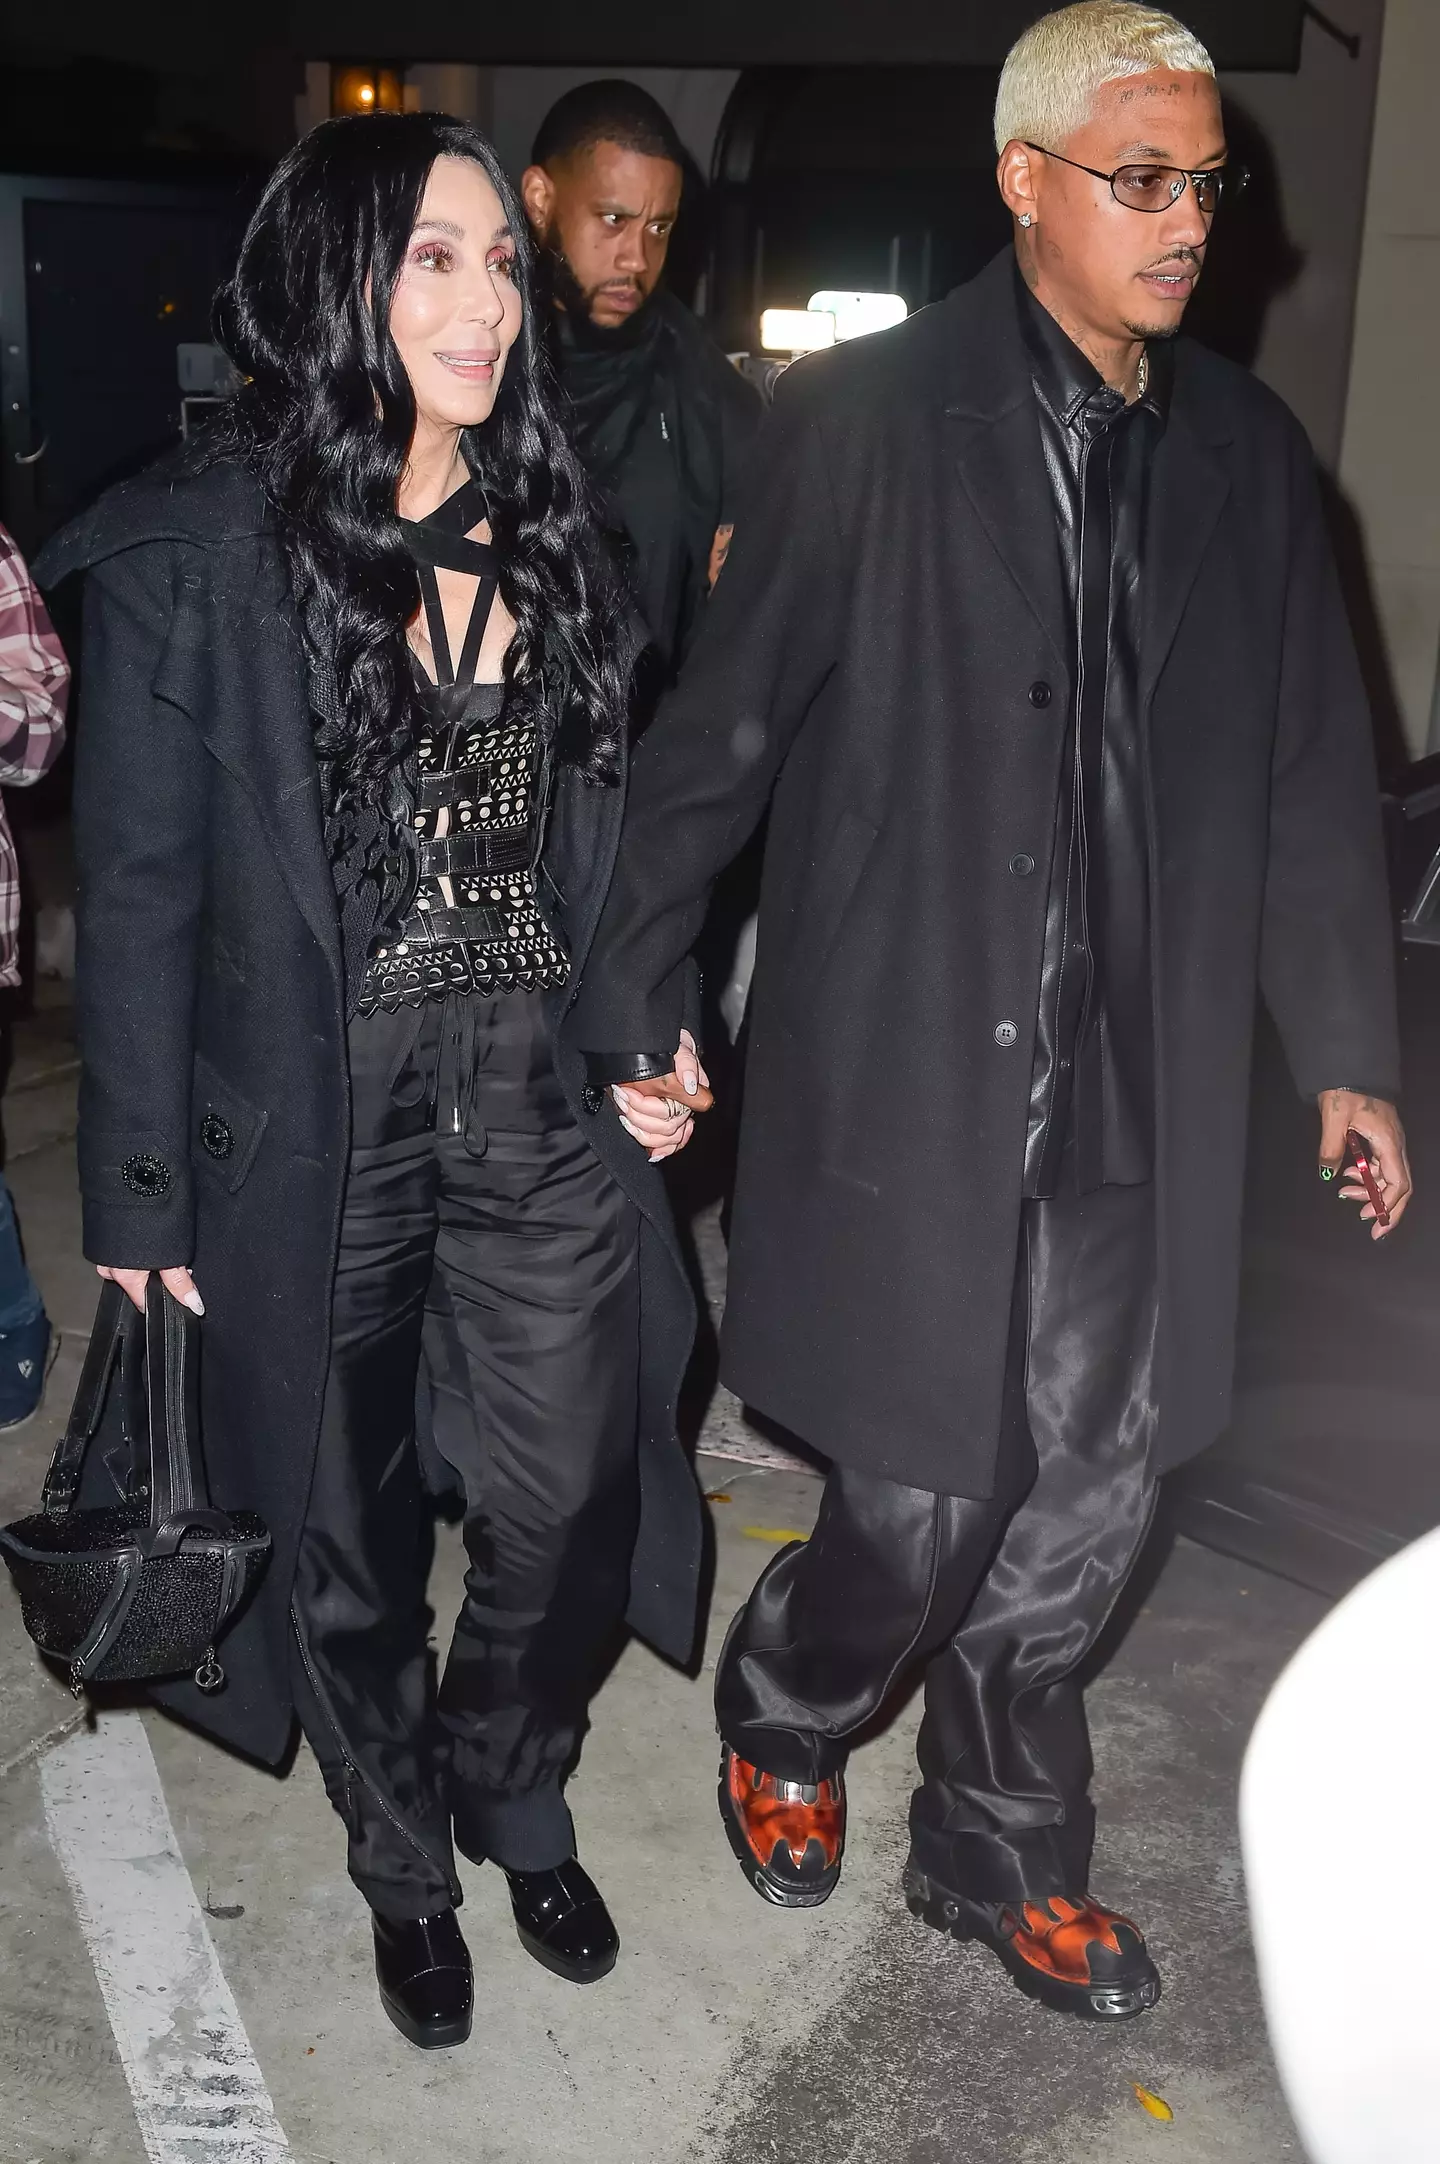 Cher and Alexander met at Paris Fashion Week. (joce zerojack/Bauer-Griffin/GC Images)